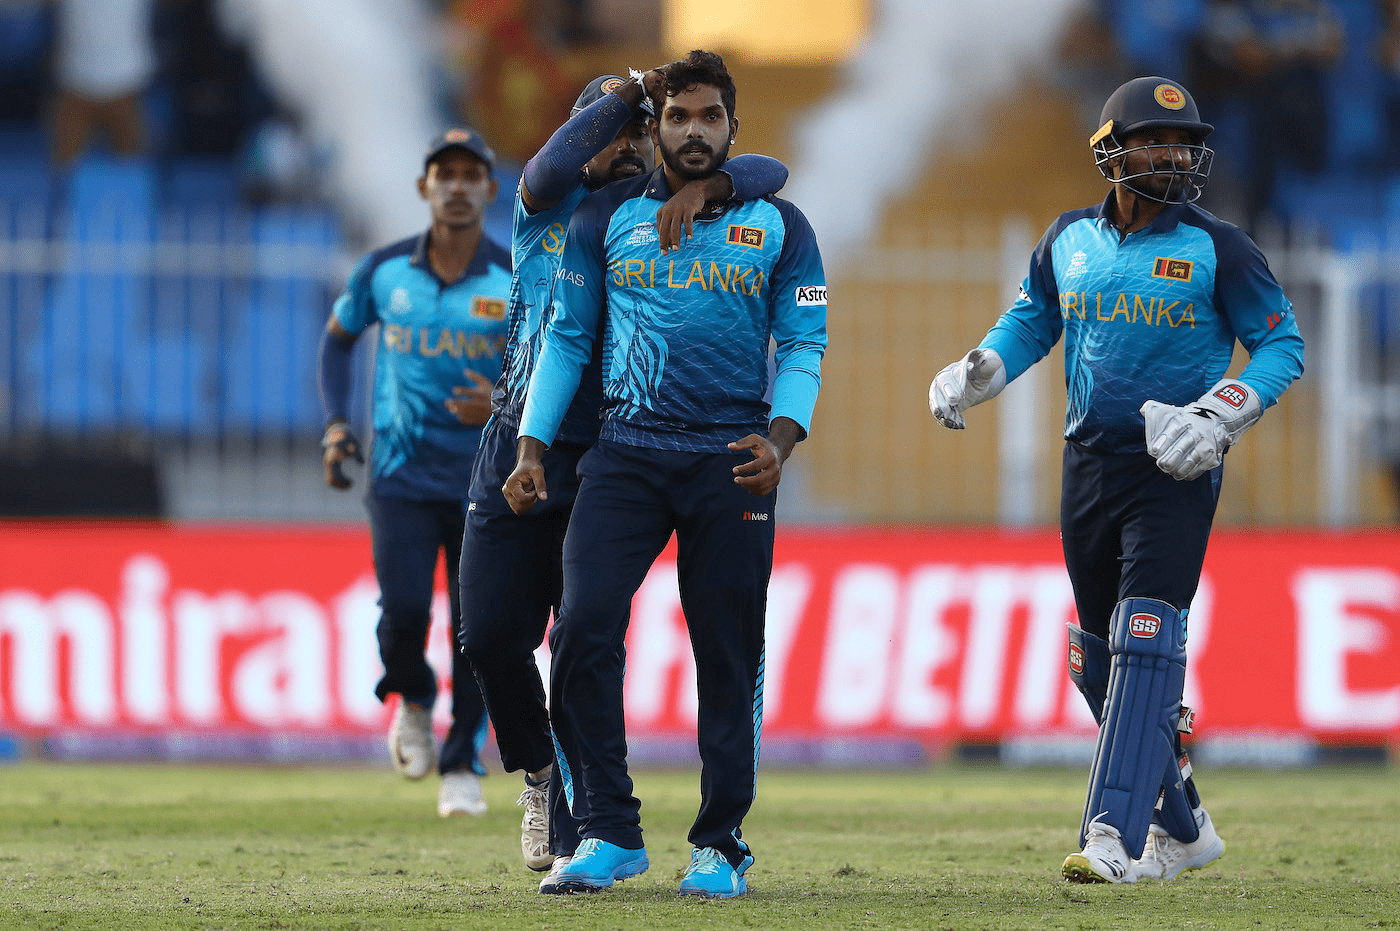 Вест-Индия – Шри-Ланка прогноз 4 ноября 2021: ставки и коэффициенты на матч Кубка мира по крикету